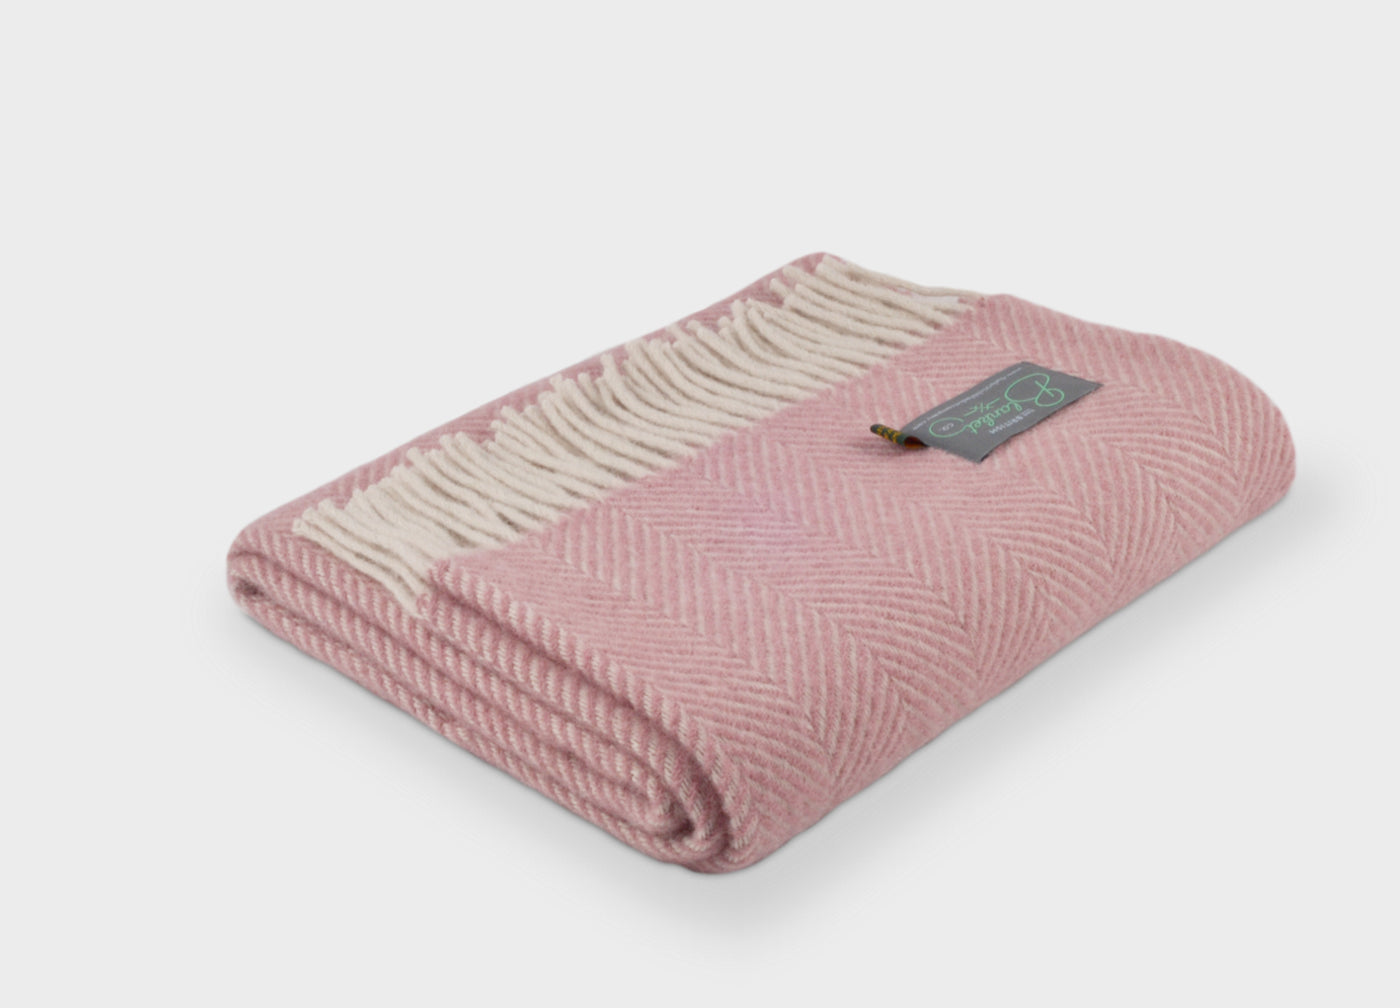 Folded pink herringbone wool throw by The British Blanket Company.